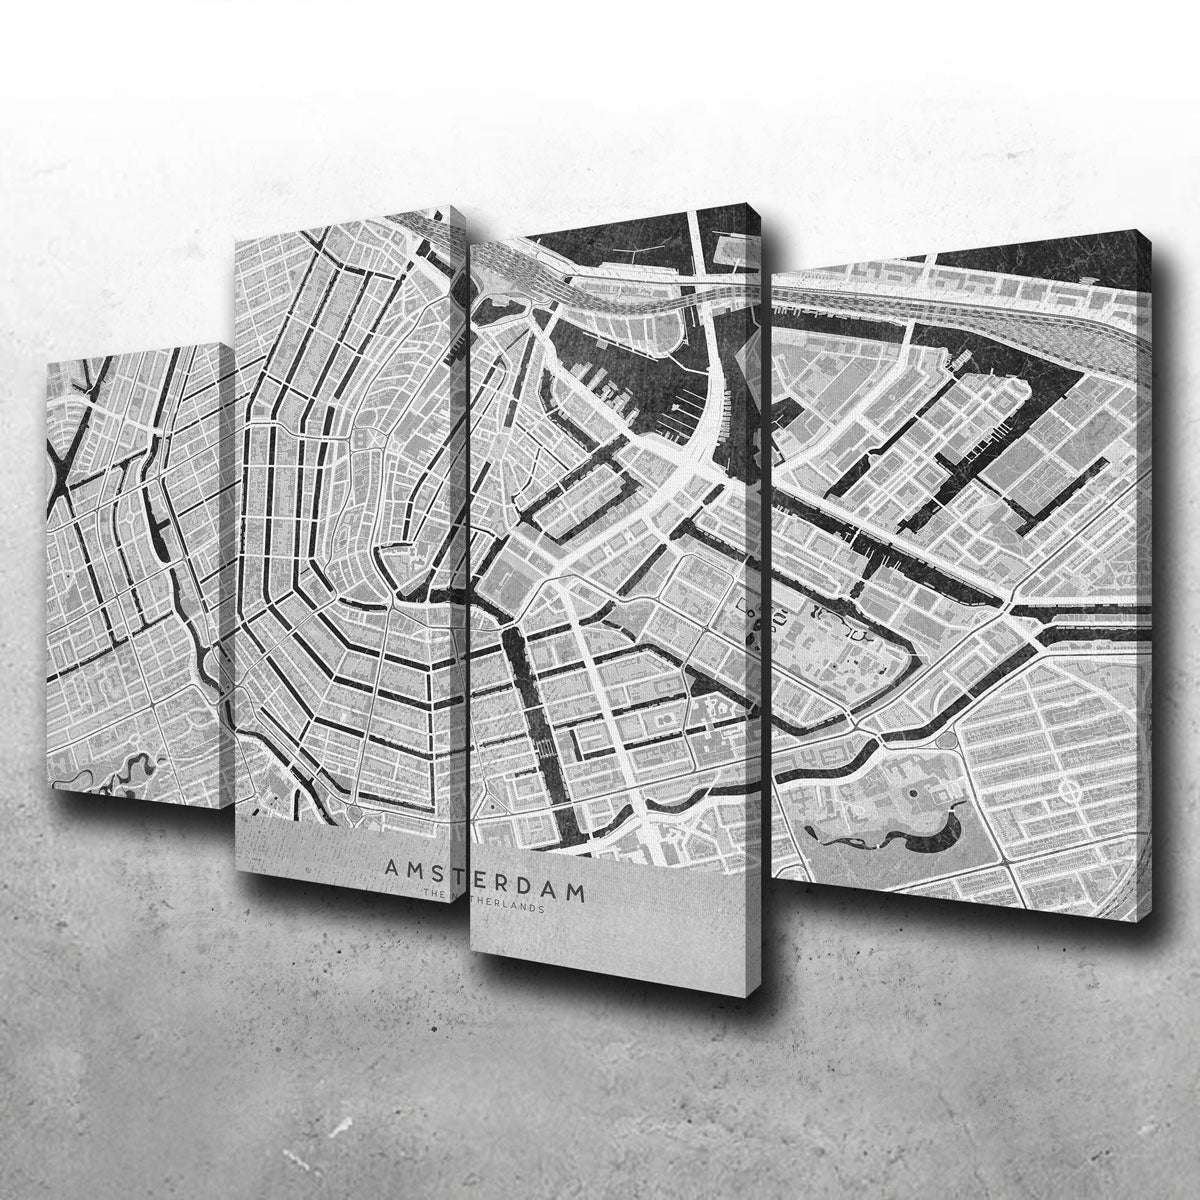 Amsterdam Map 2